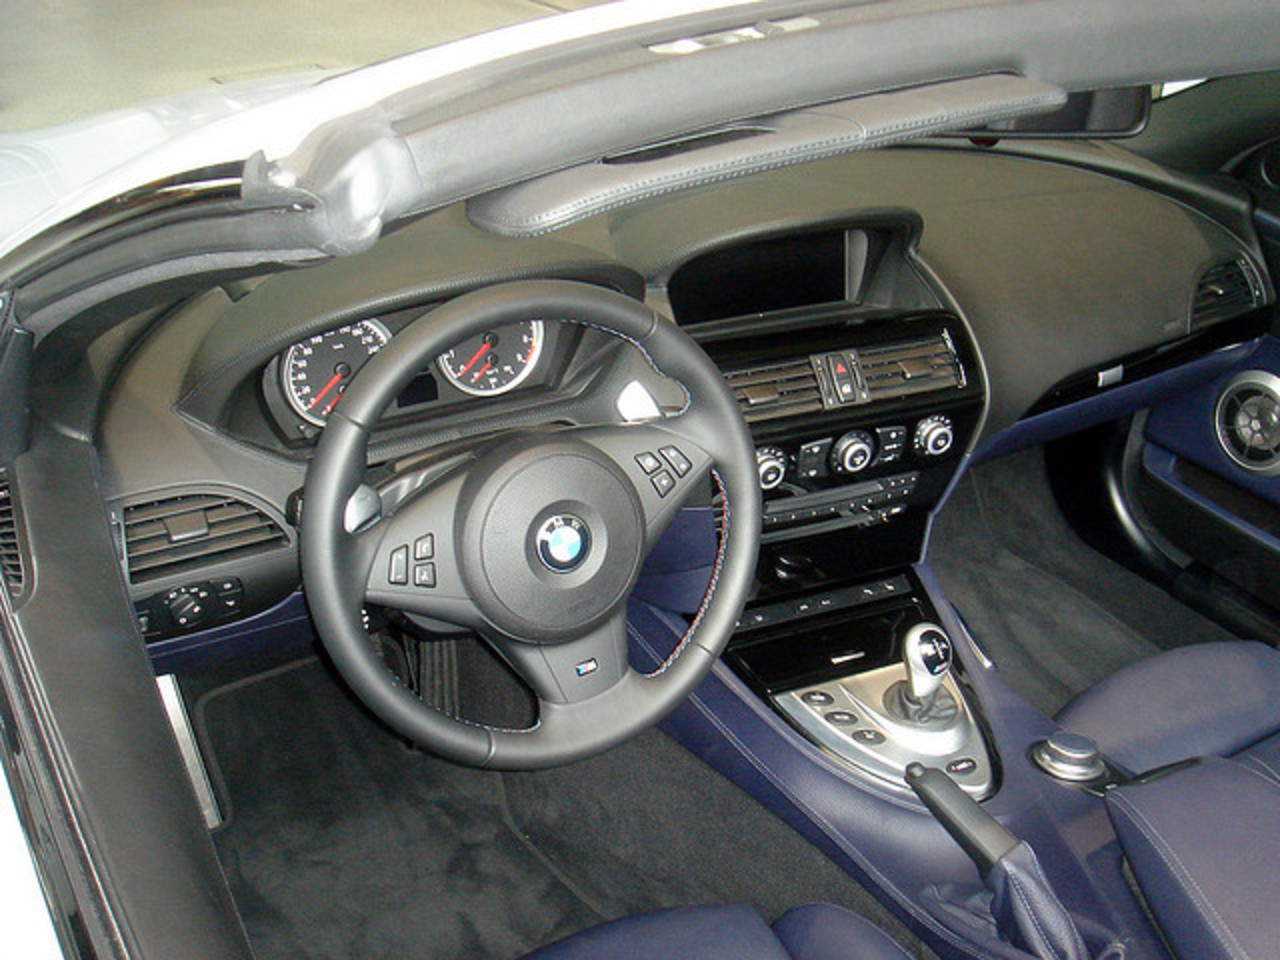 BMW M6 Cabrio Cockpit | Flickr - Photo Sharing!